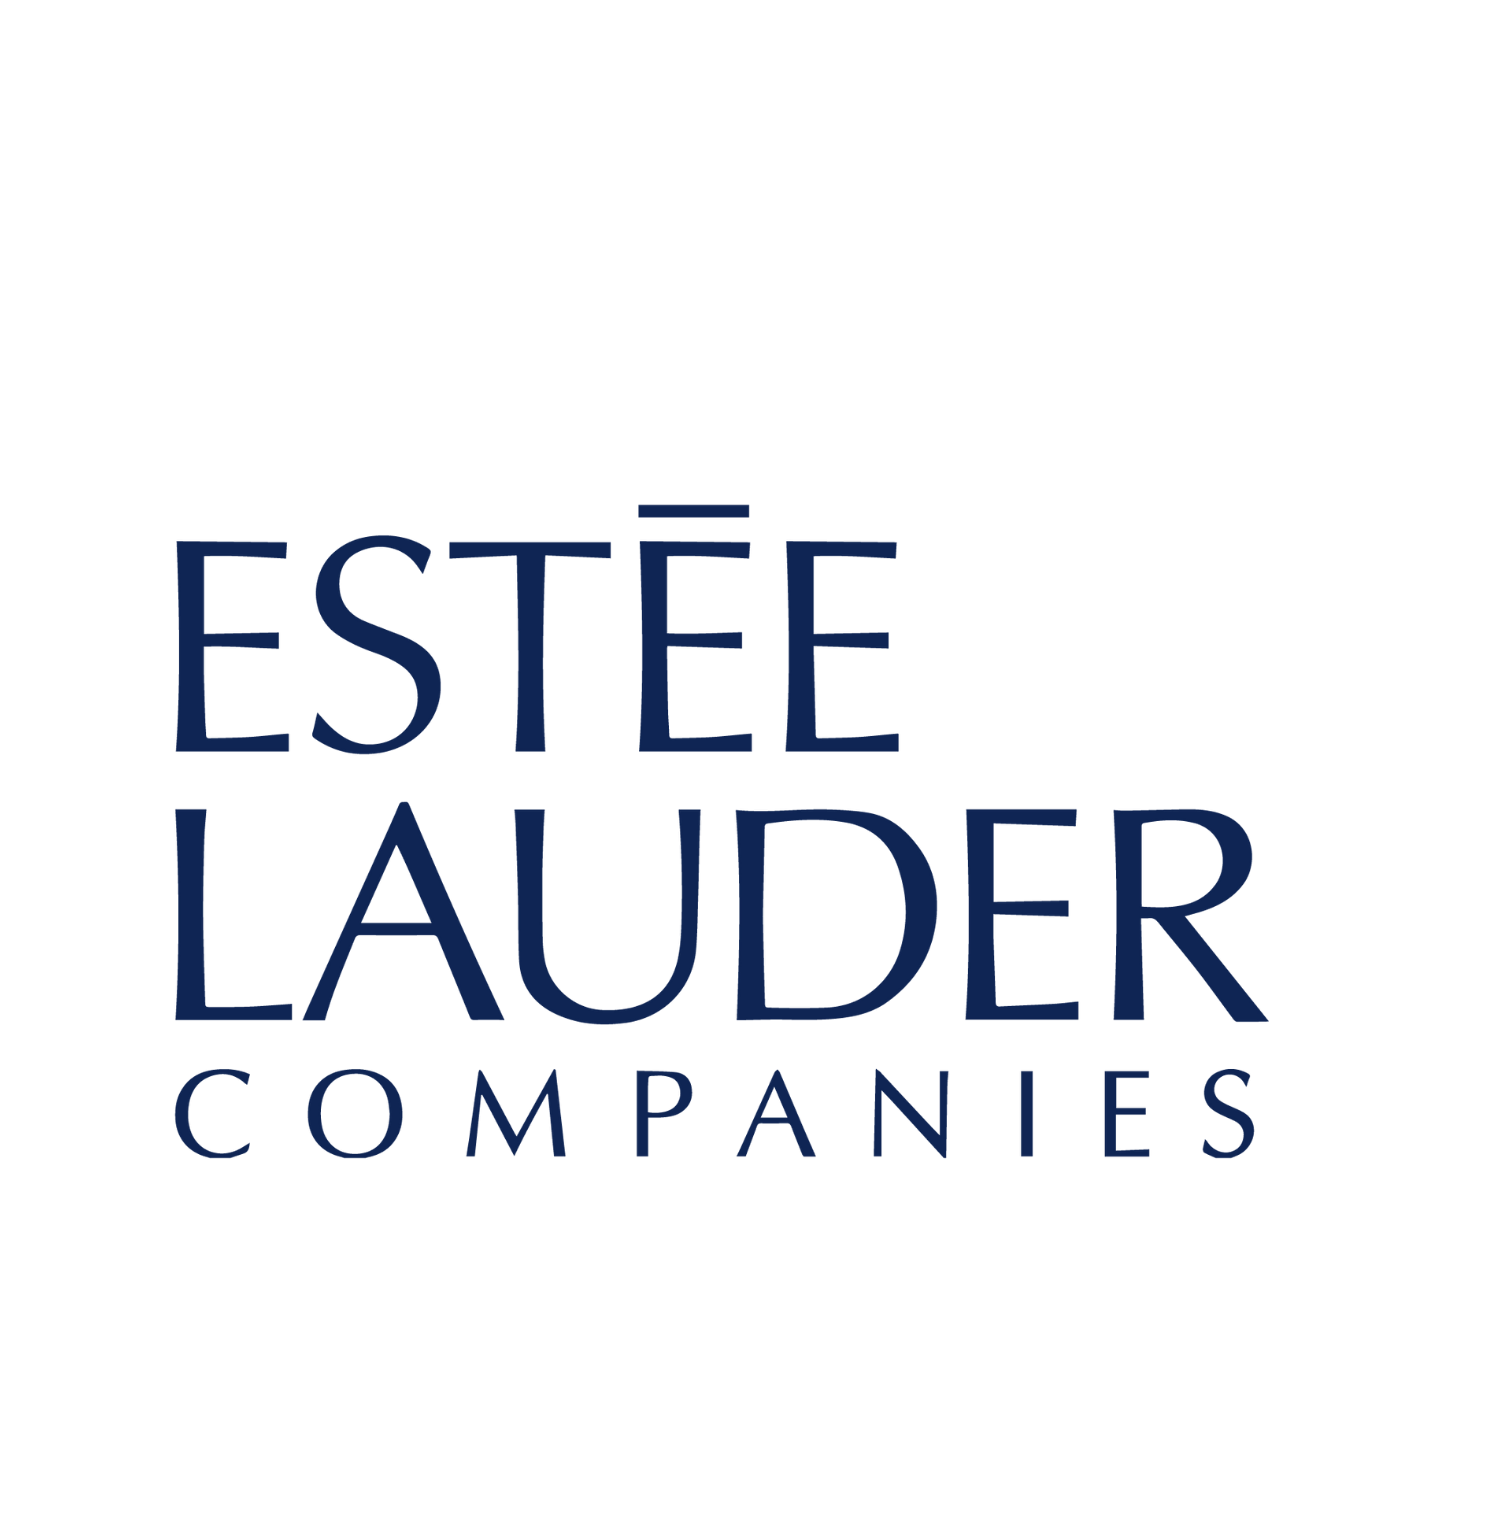 The Estée Lauder Companies  2023 Campus Forward Award Winner